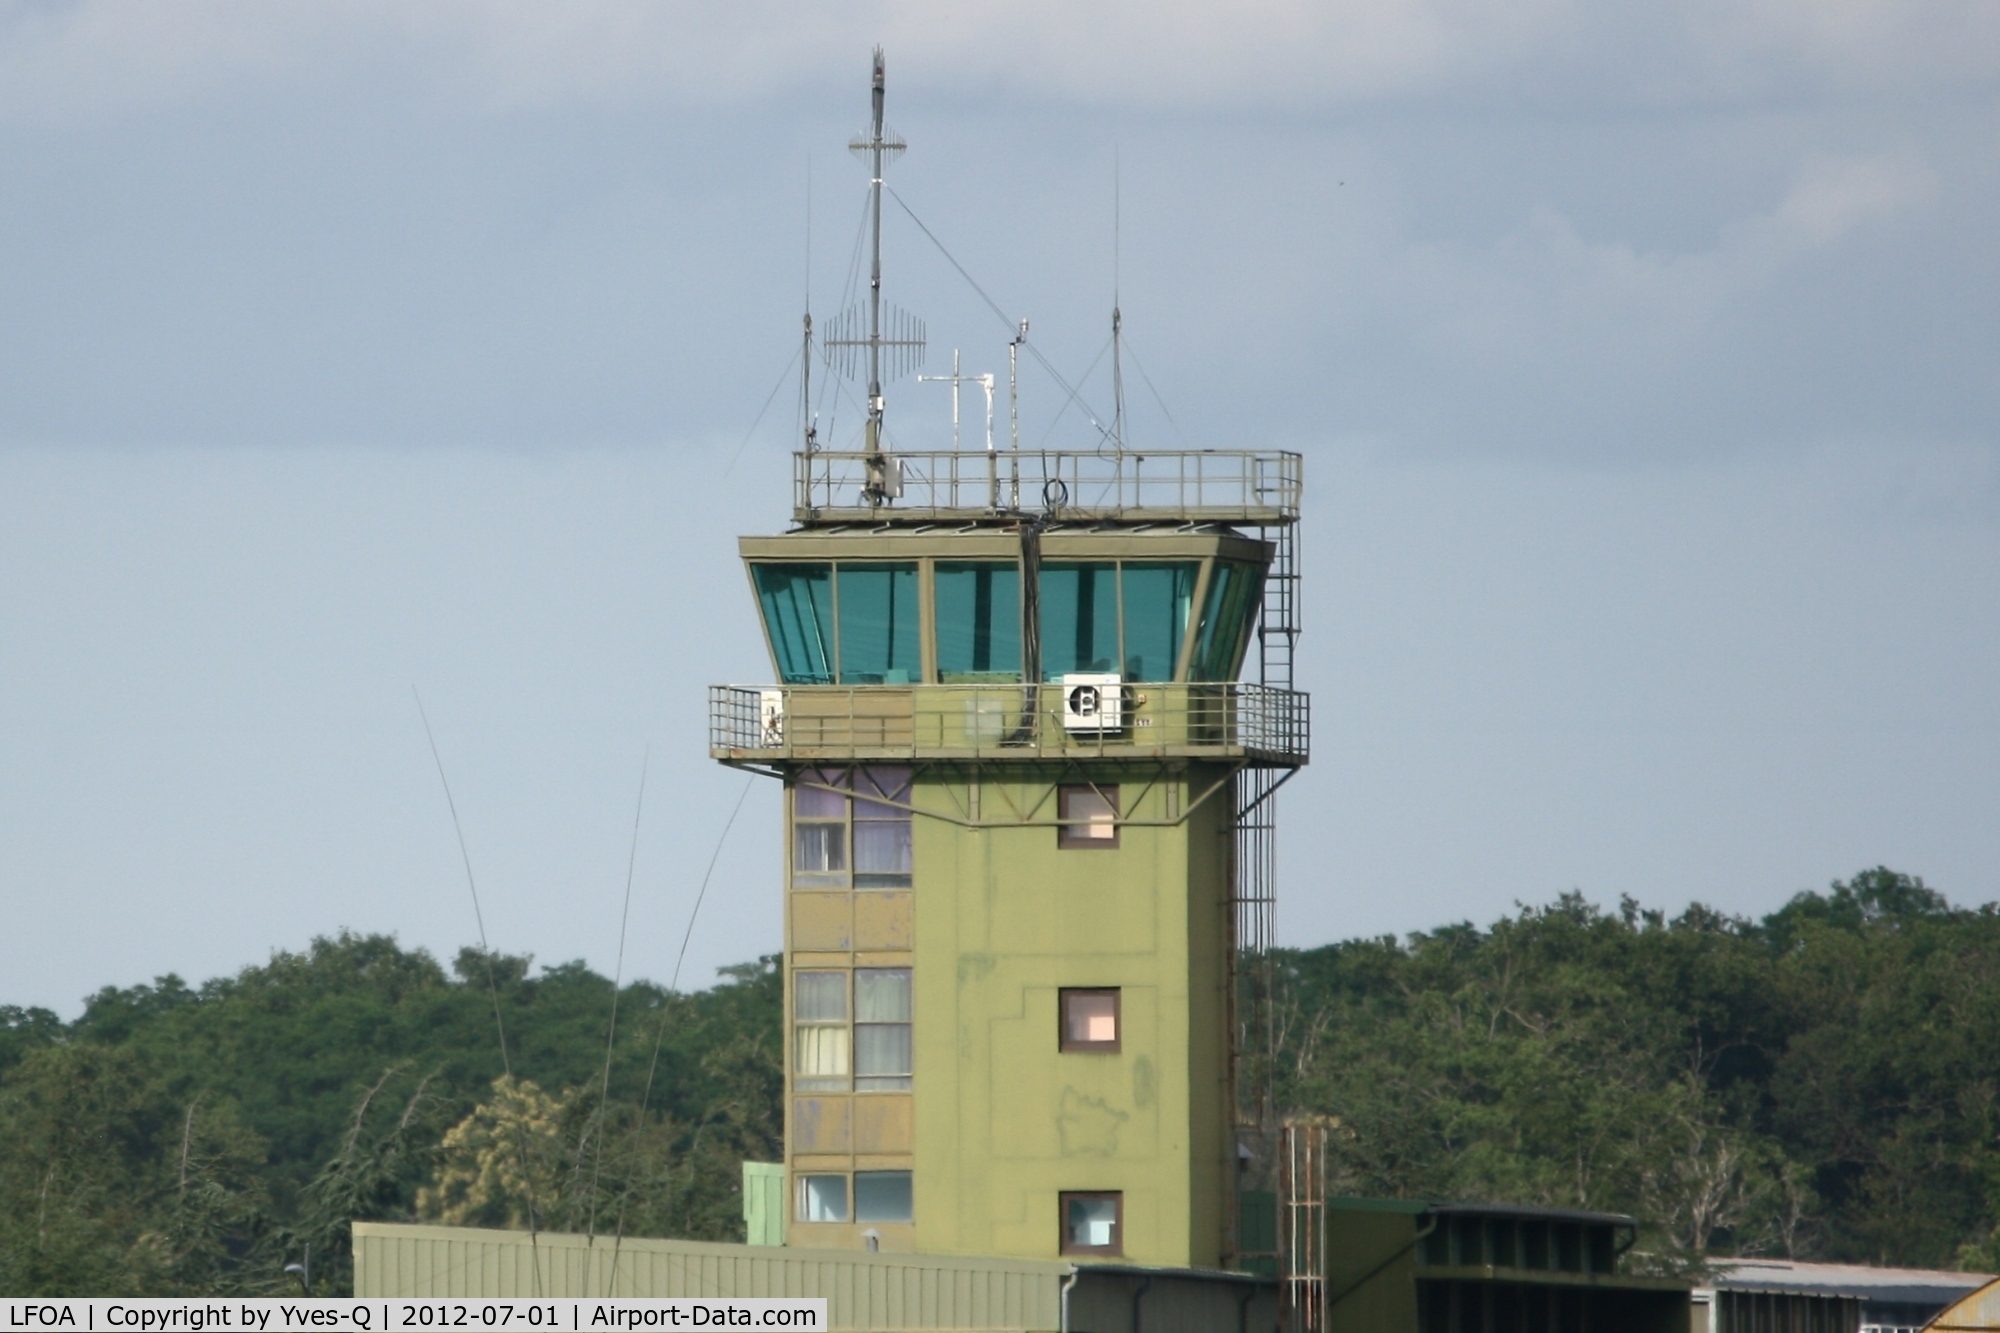 LFOA Airport - Disused Control Tower, Avord Air Base (LFOA)